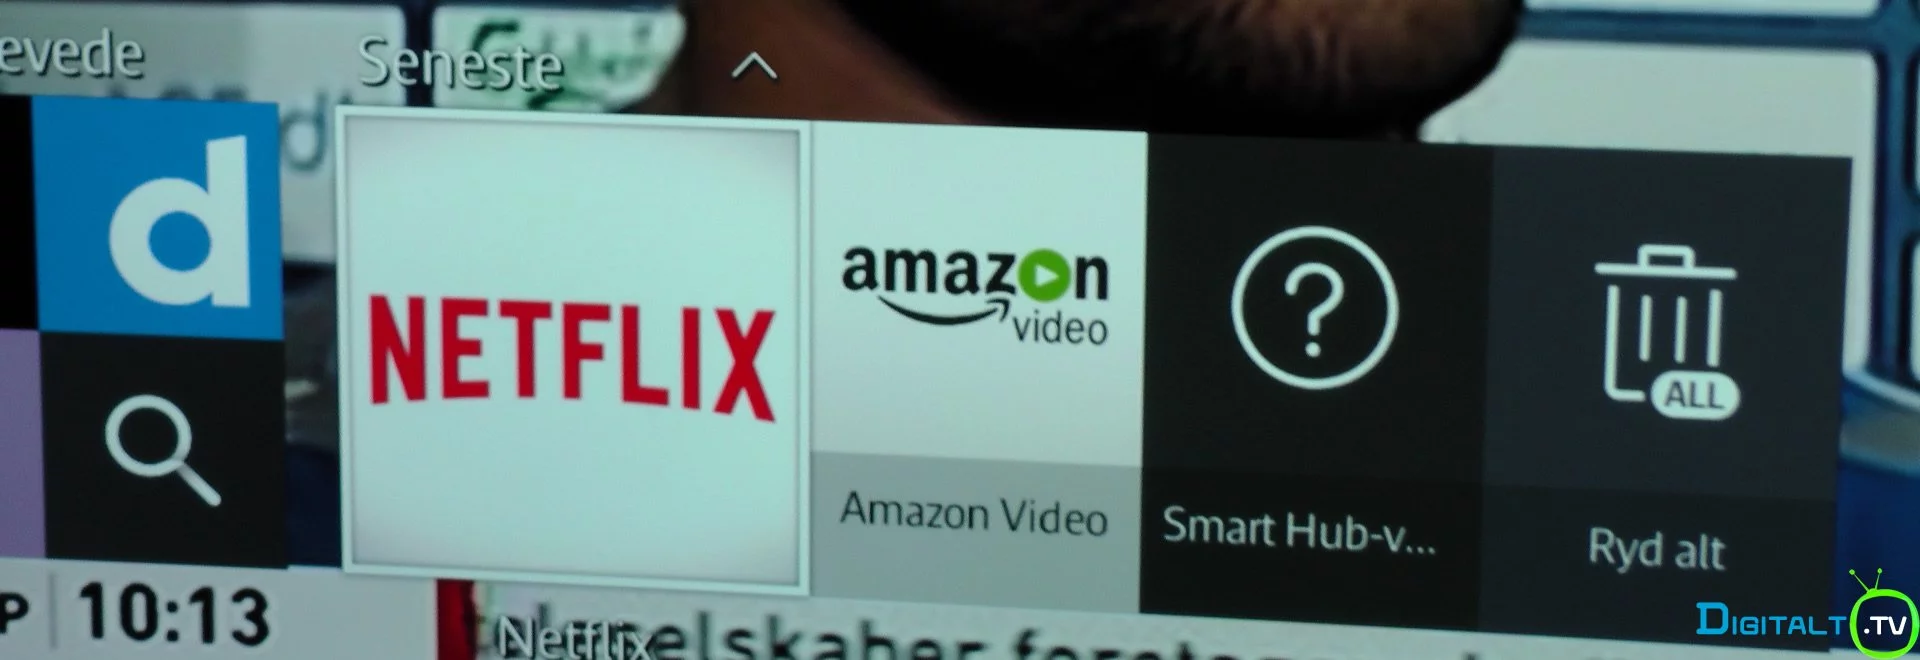 Amazon Samsung Tizen Smart TV menu